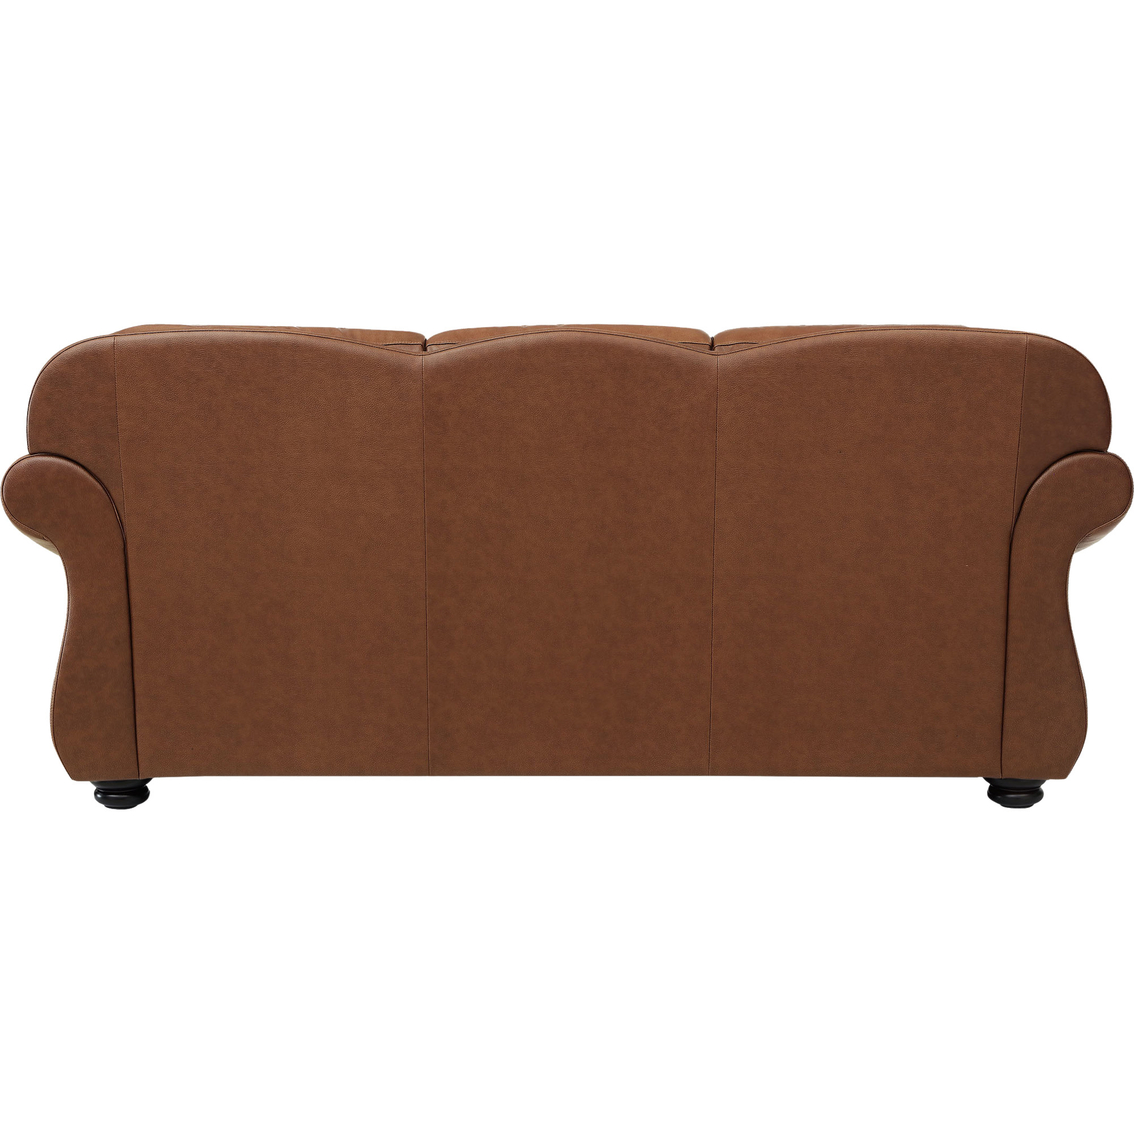 Abbyson Tuscany Leather Sofa - Image 2 of 5